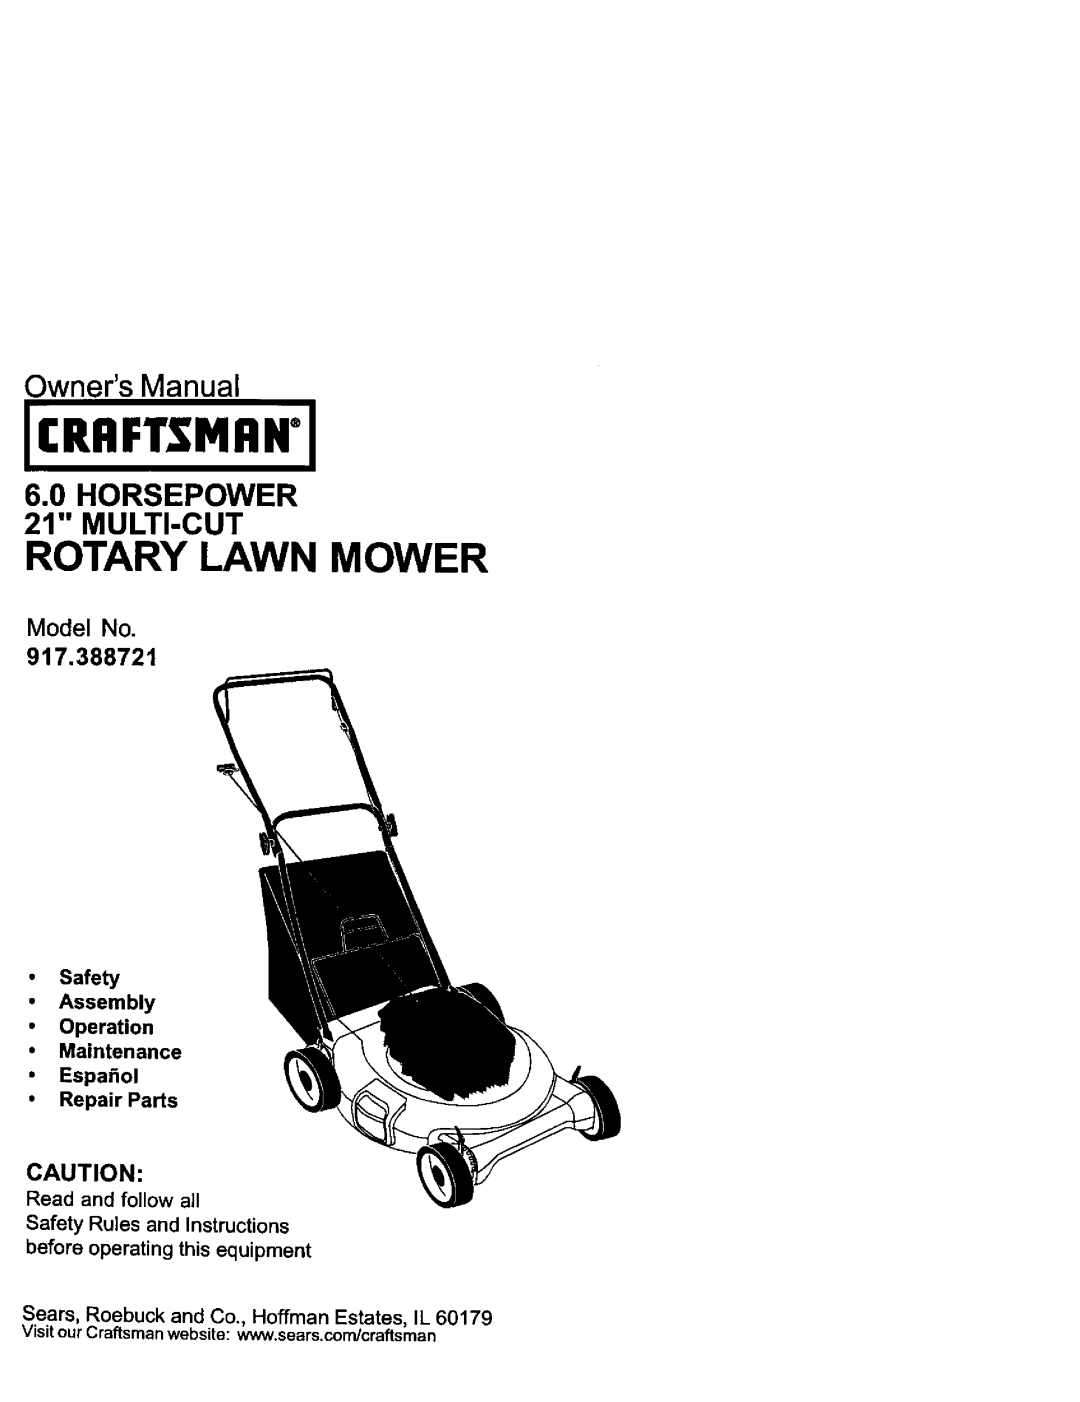 Craftsman 38872 owner manual Model No, JCRAFT$1qAWJ, Rotary Lawn Mower, OwnersManual, 6.0HORSEPOWER 21 MULTI-CUT 